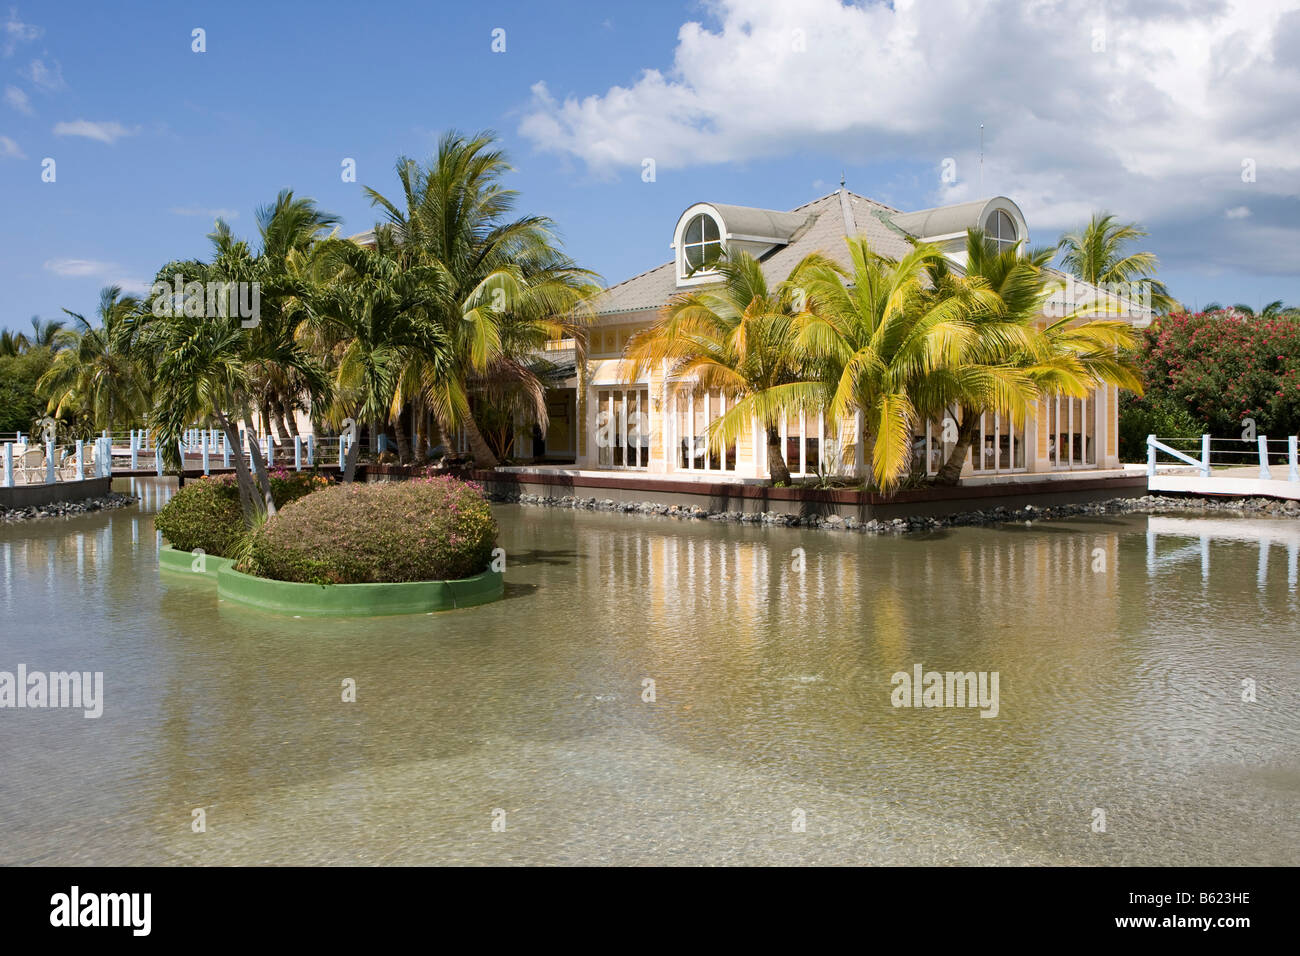 Restaurant, Tryp Peninsula Hotel, Varadero, Cuba, Caribbean, America Stock Photo